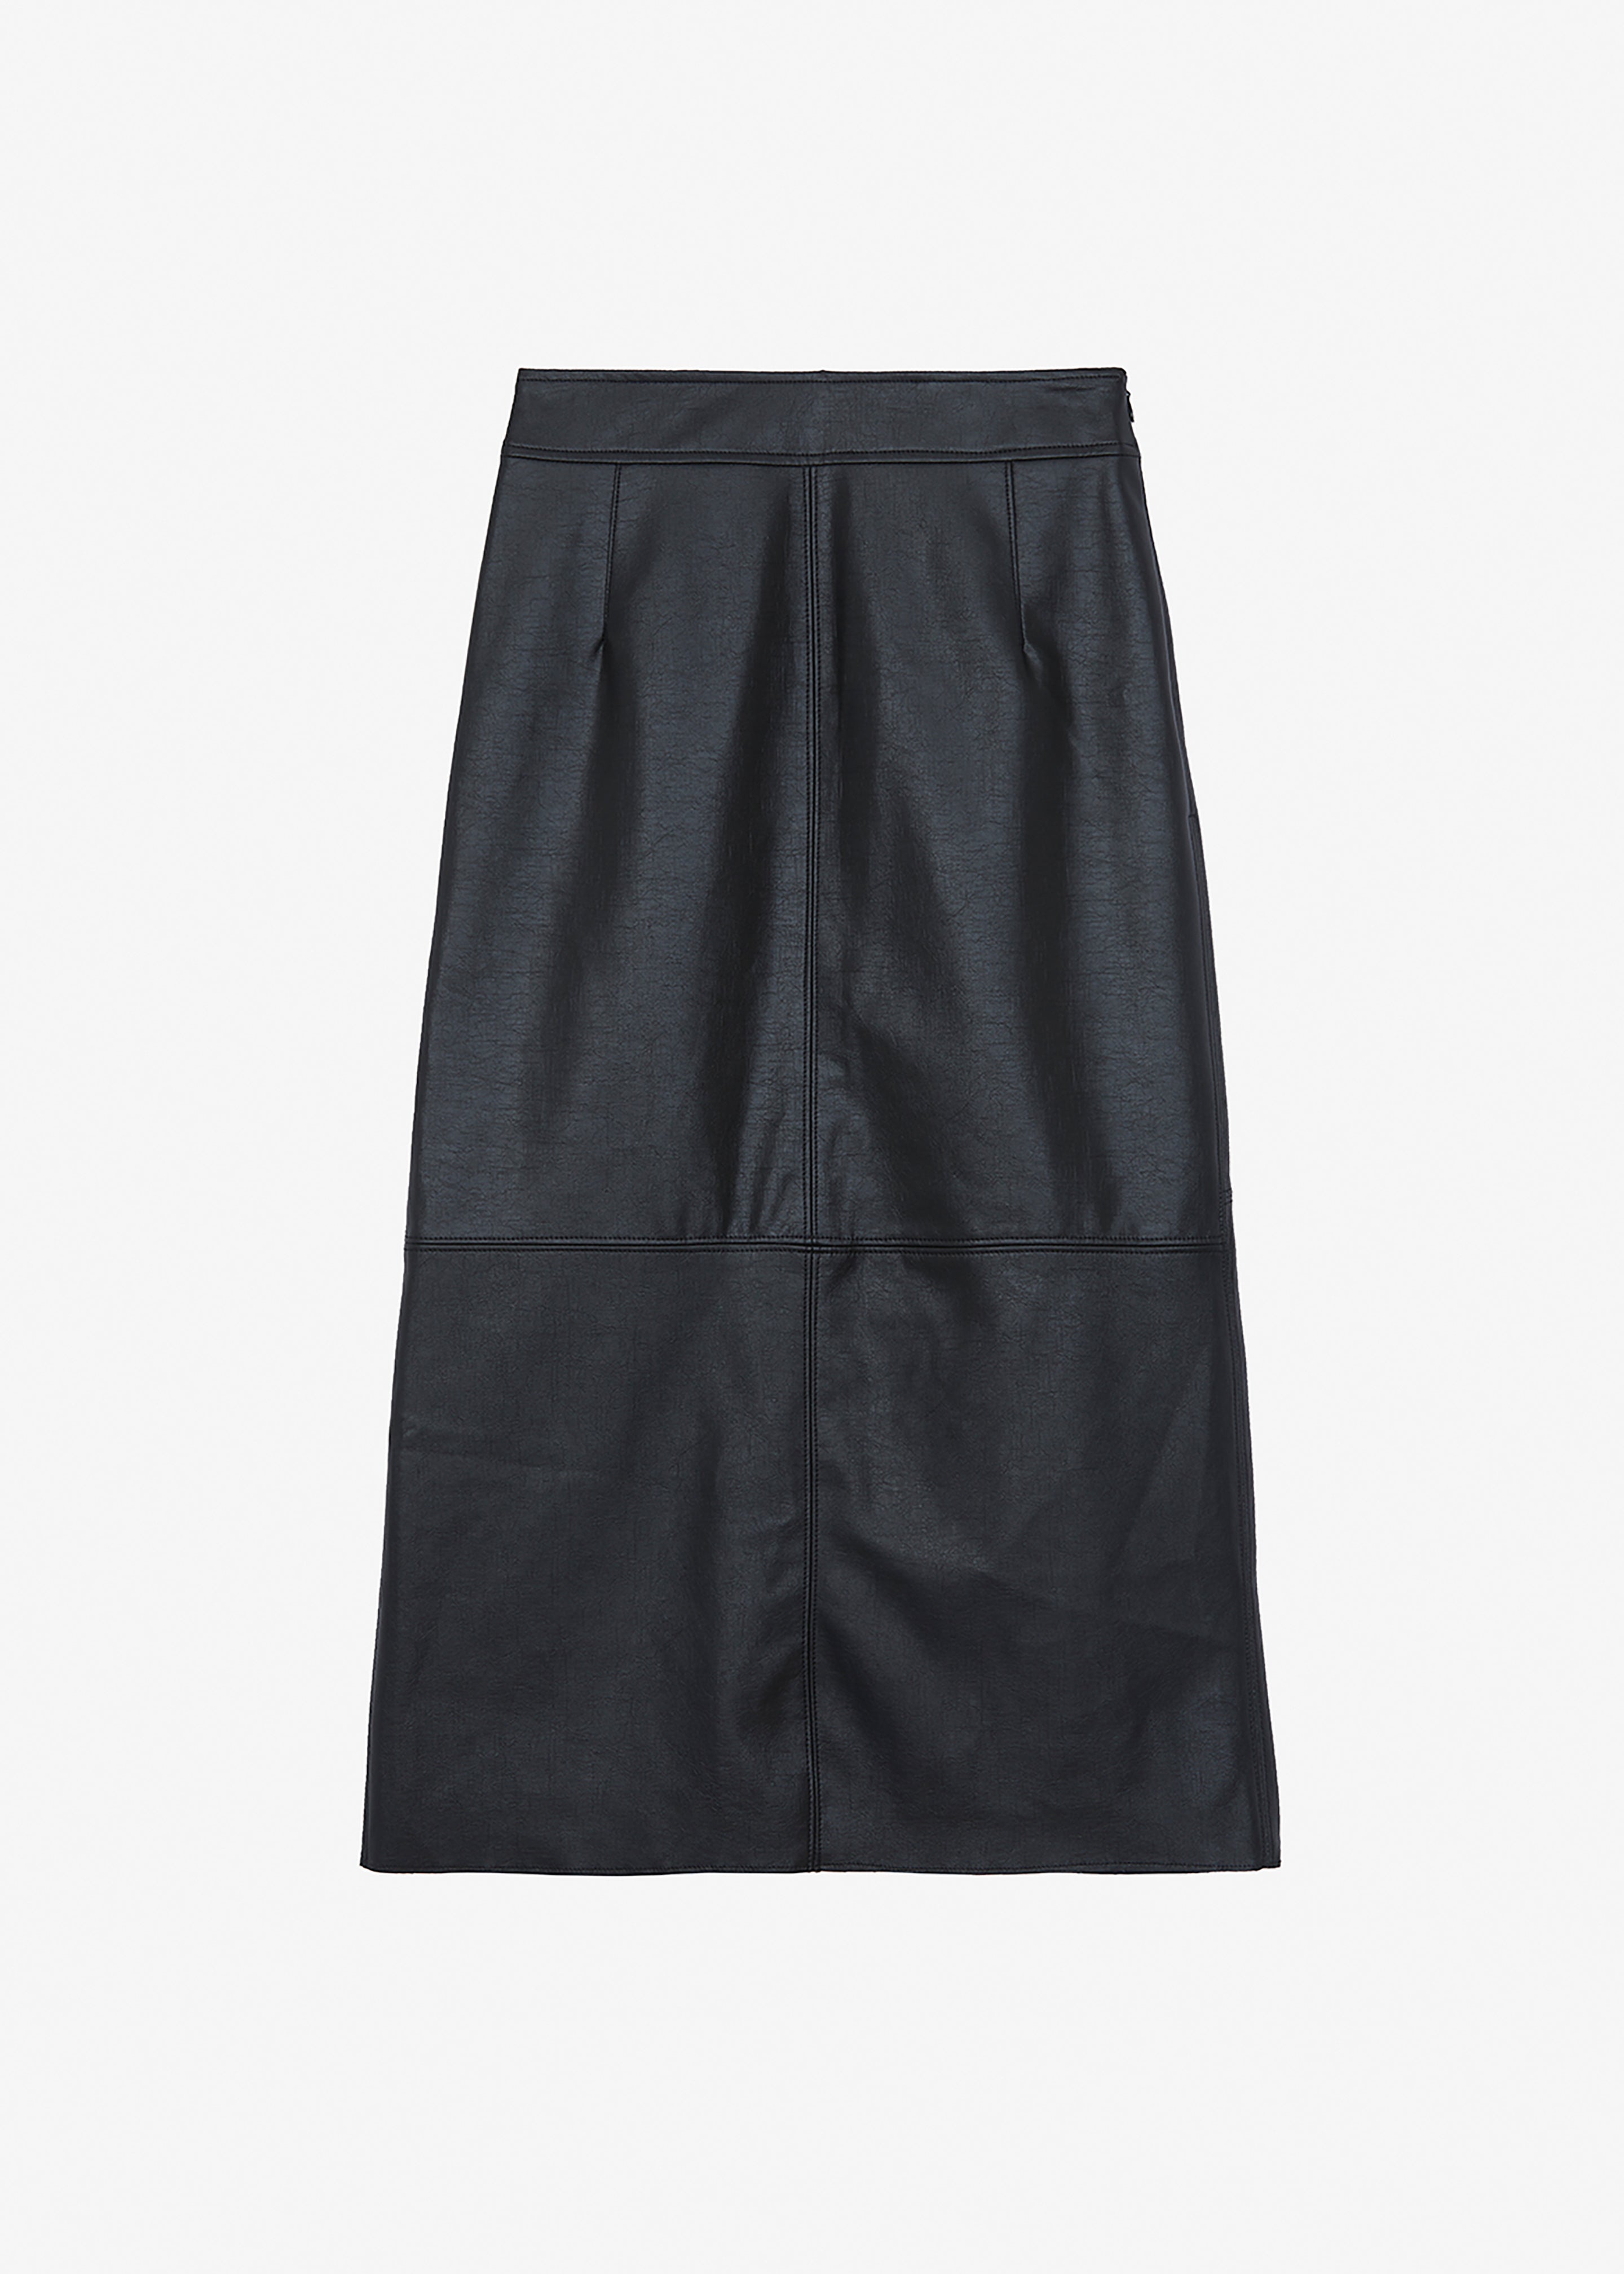 Manyne Faux Leather Pencil Skirt - Black - 10